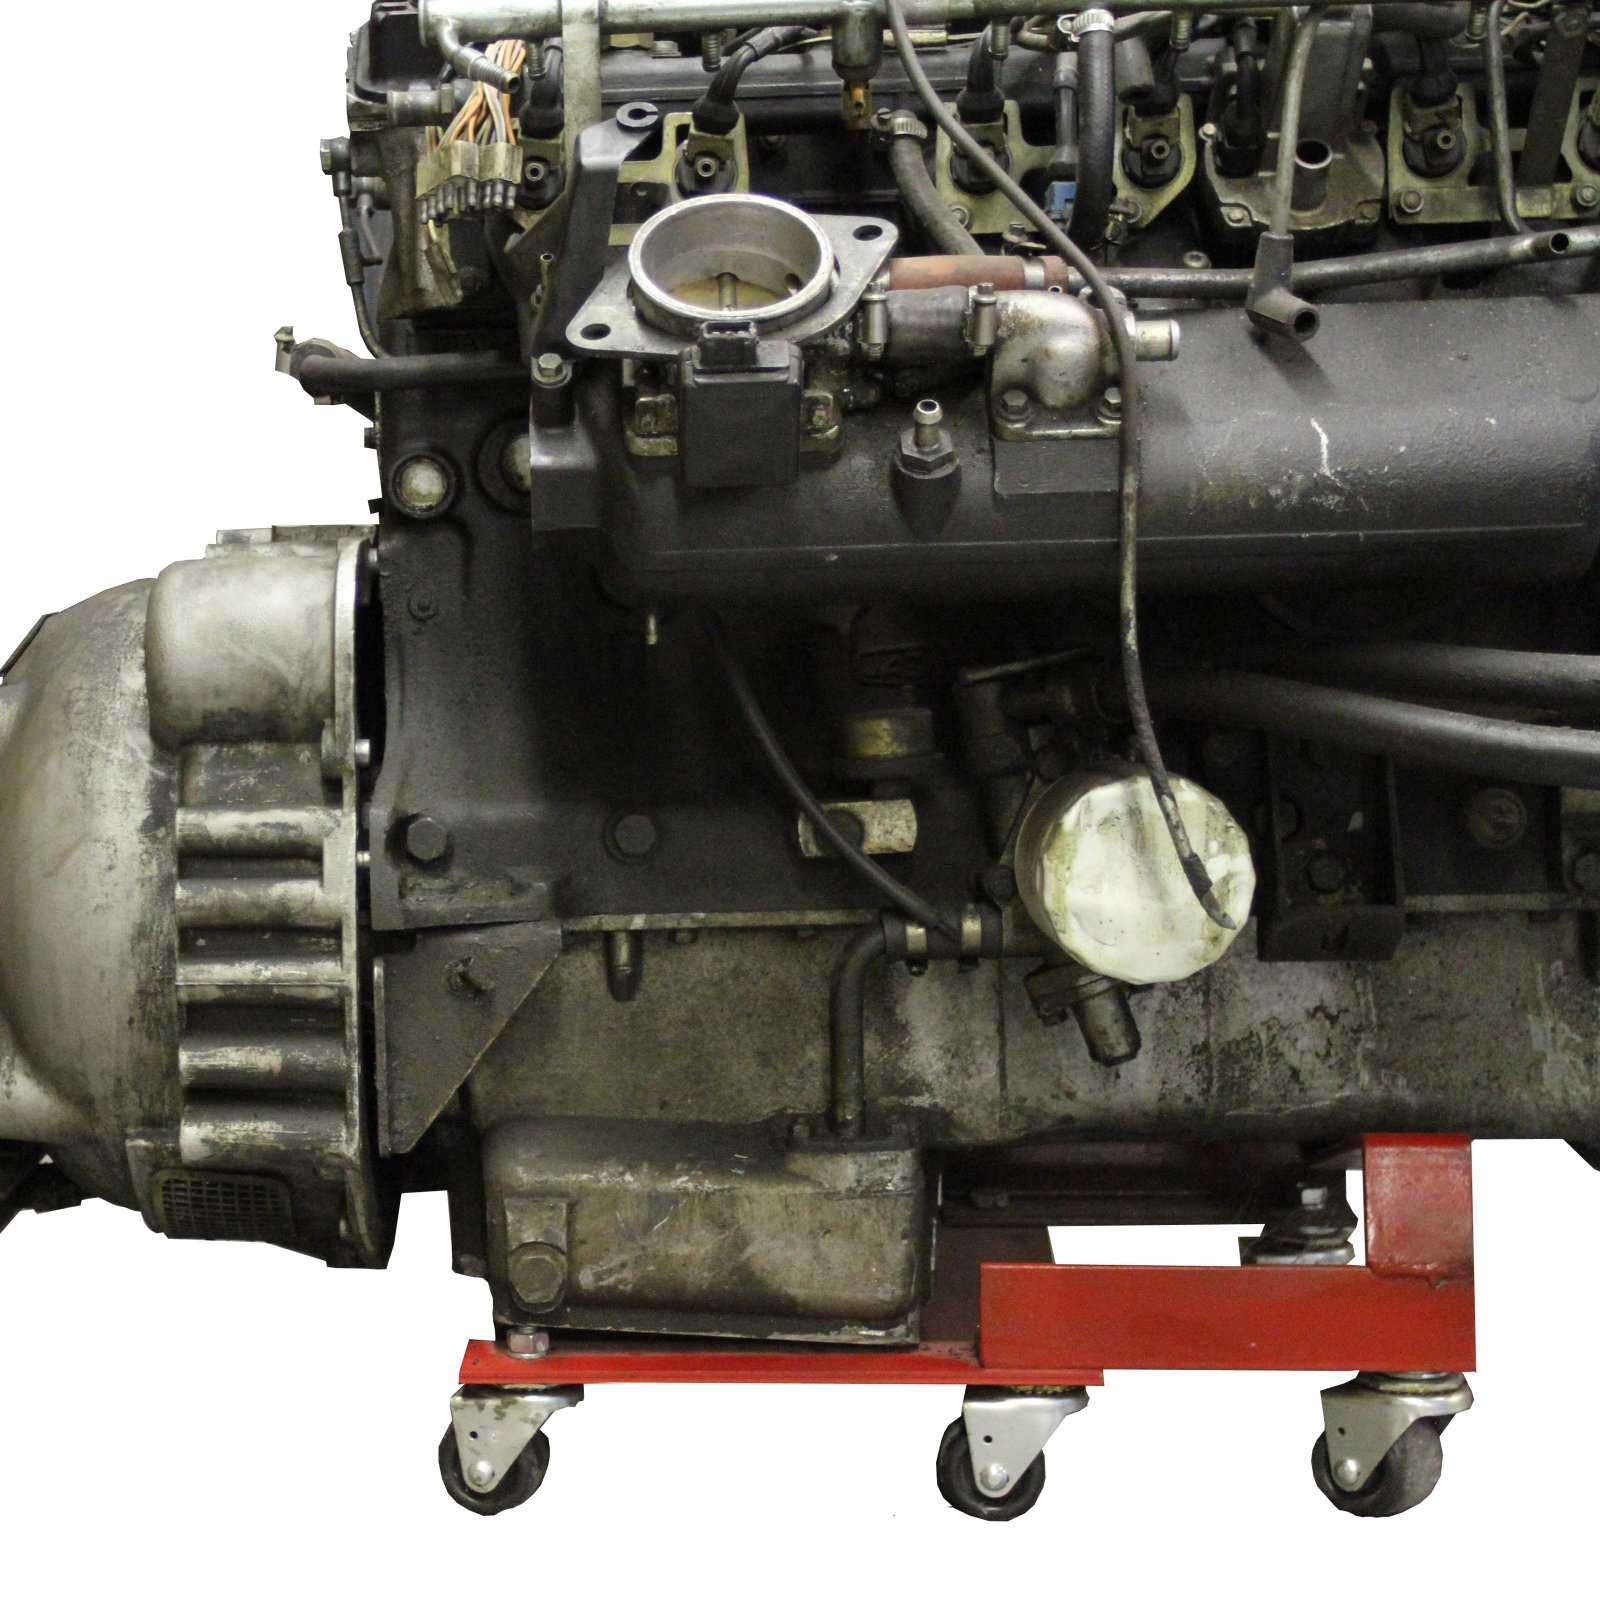 Merrick Originals Engine Dolly Attachment for 12 in. Standard Auto Dolly